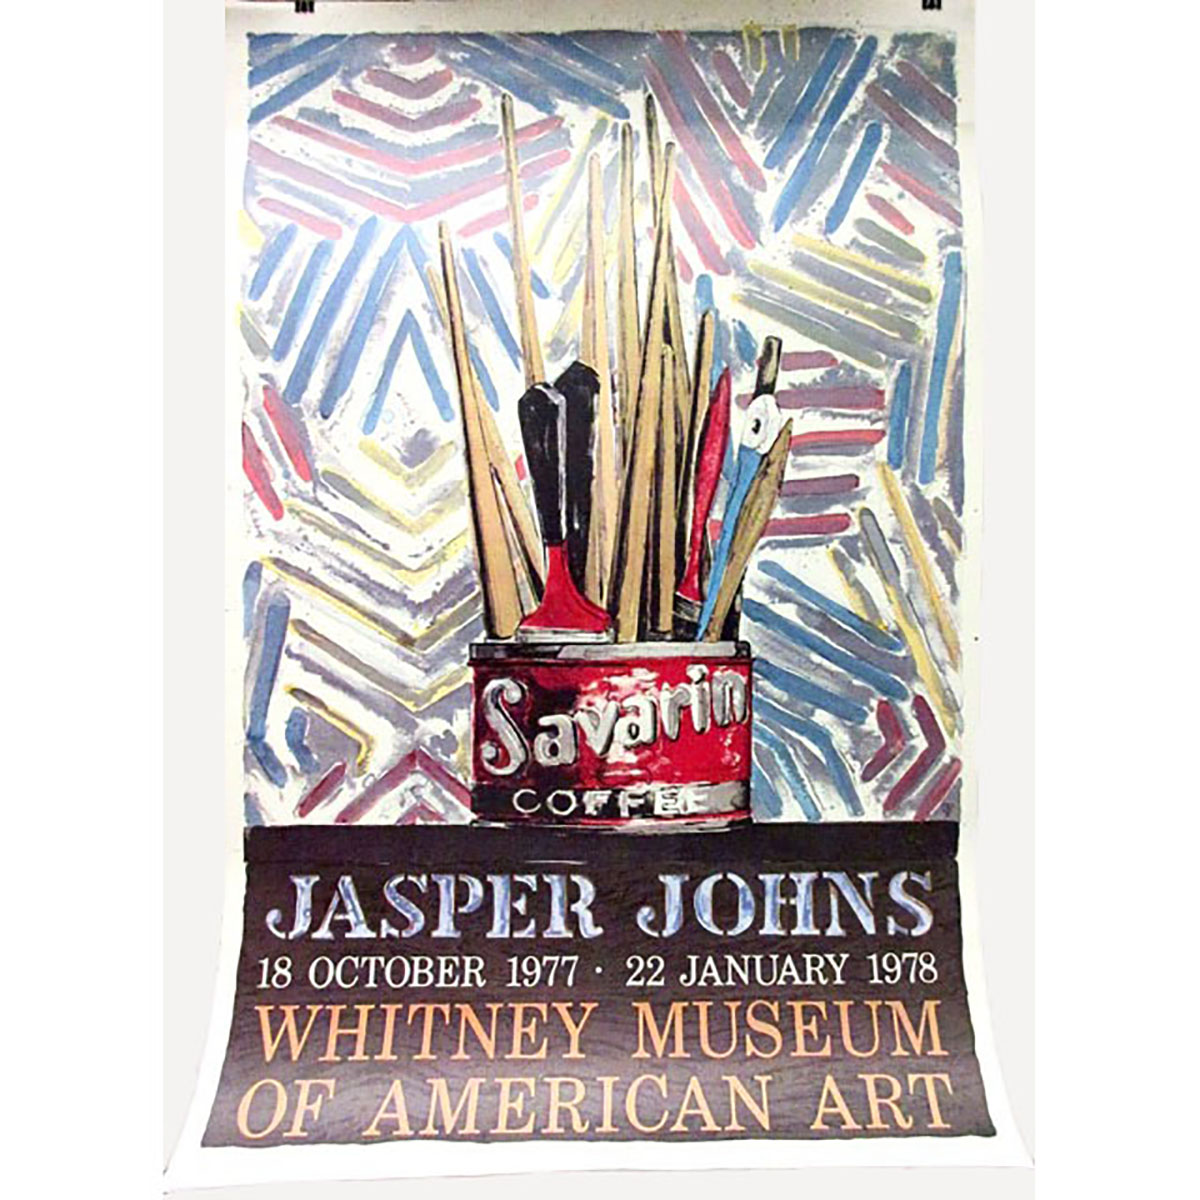 JASPER JOHNS (AMERICAN, 1930-) 